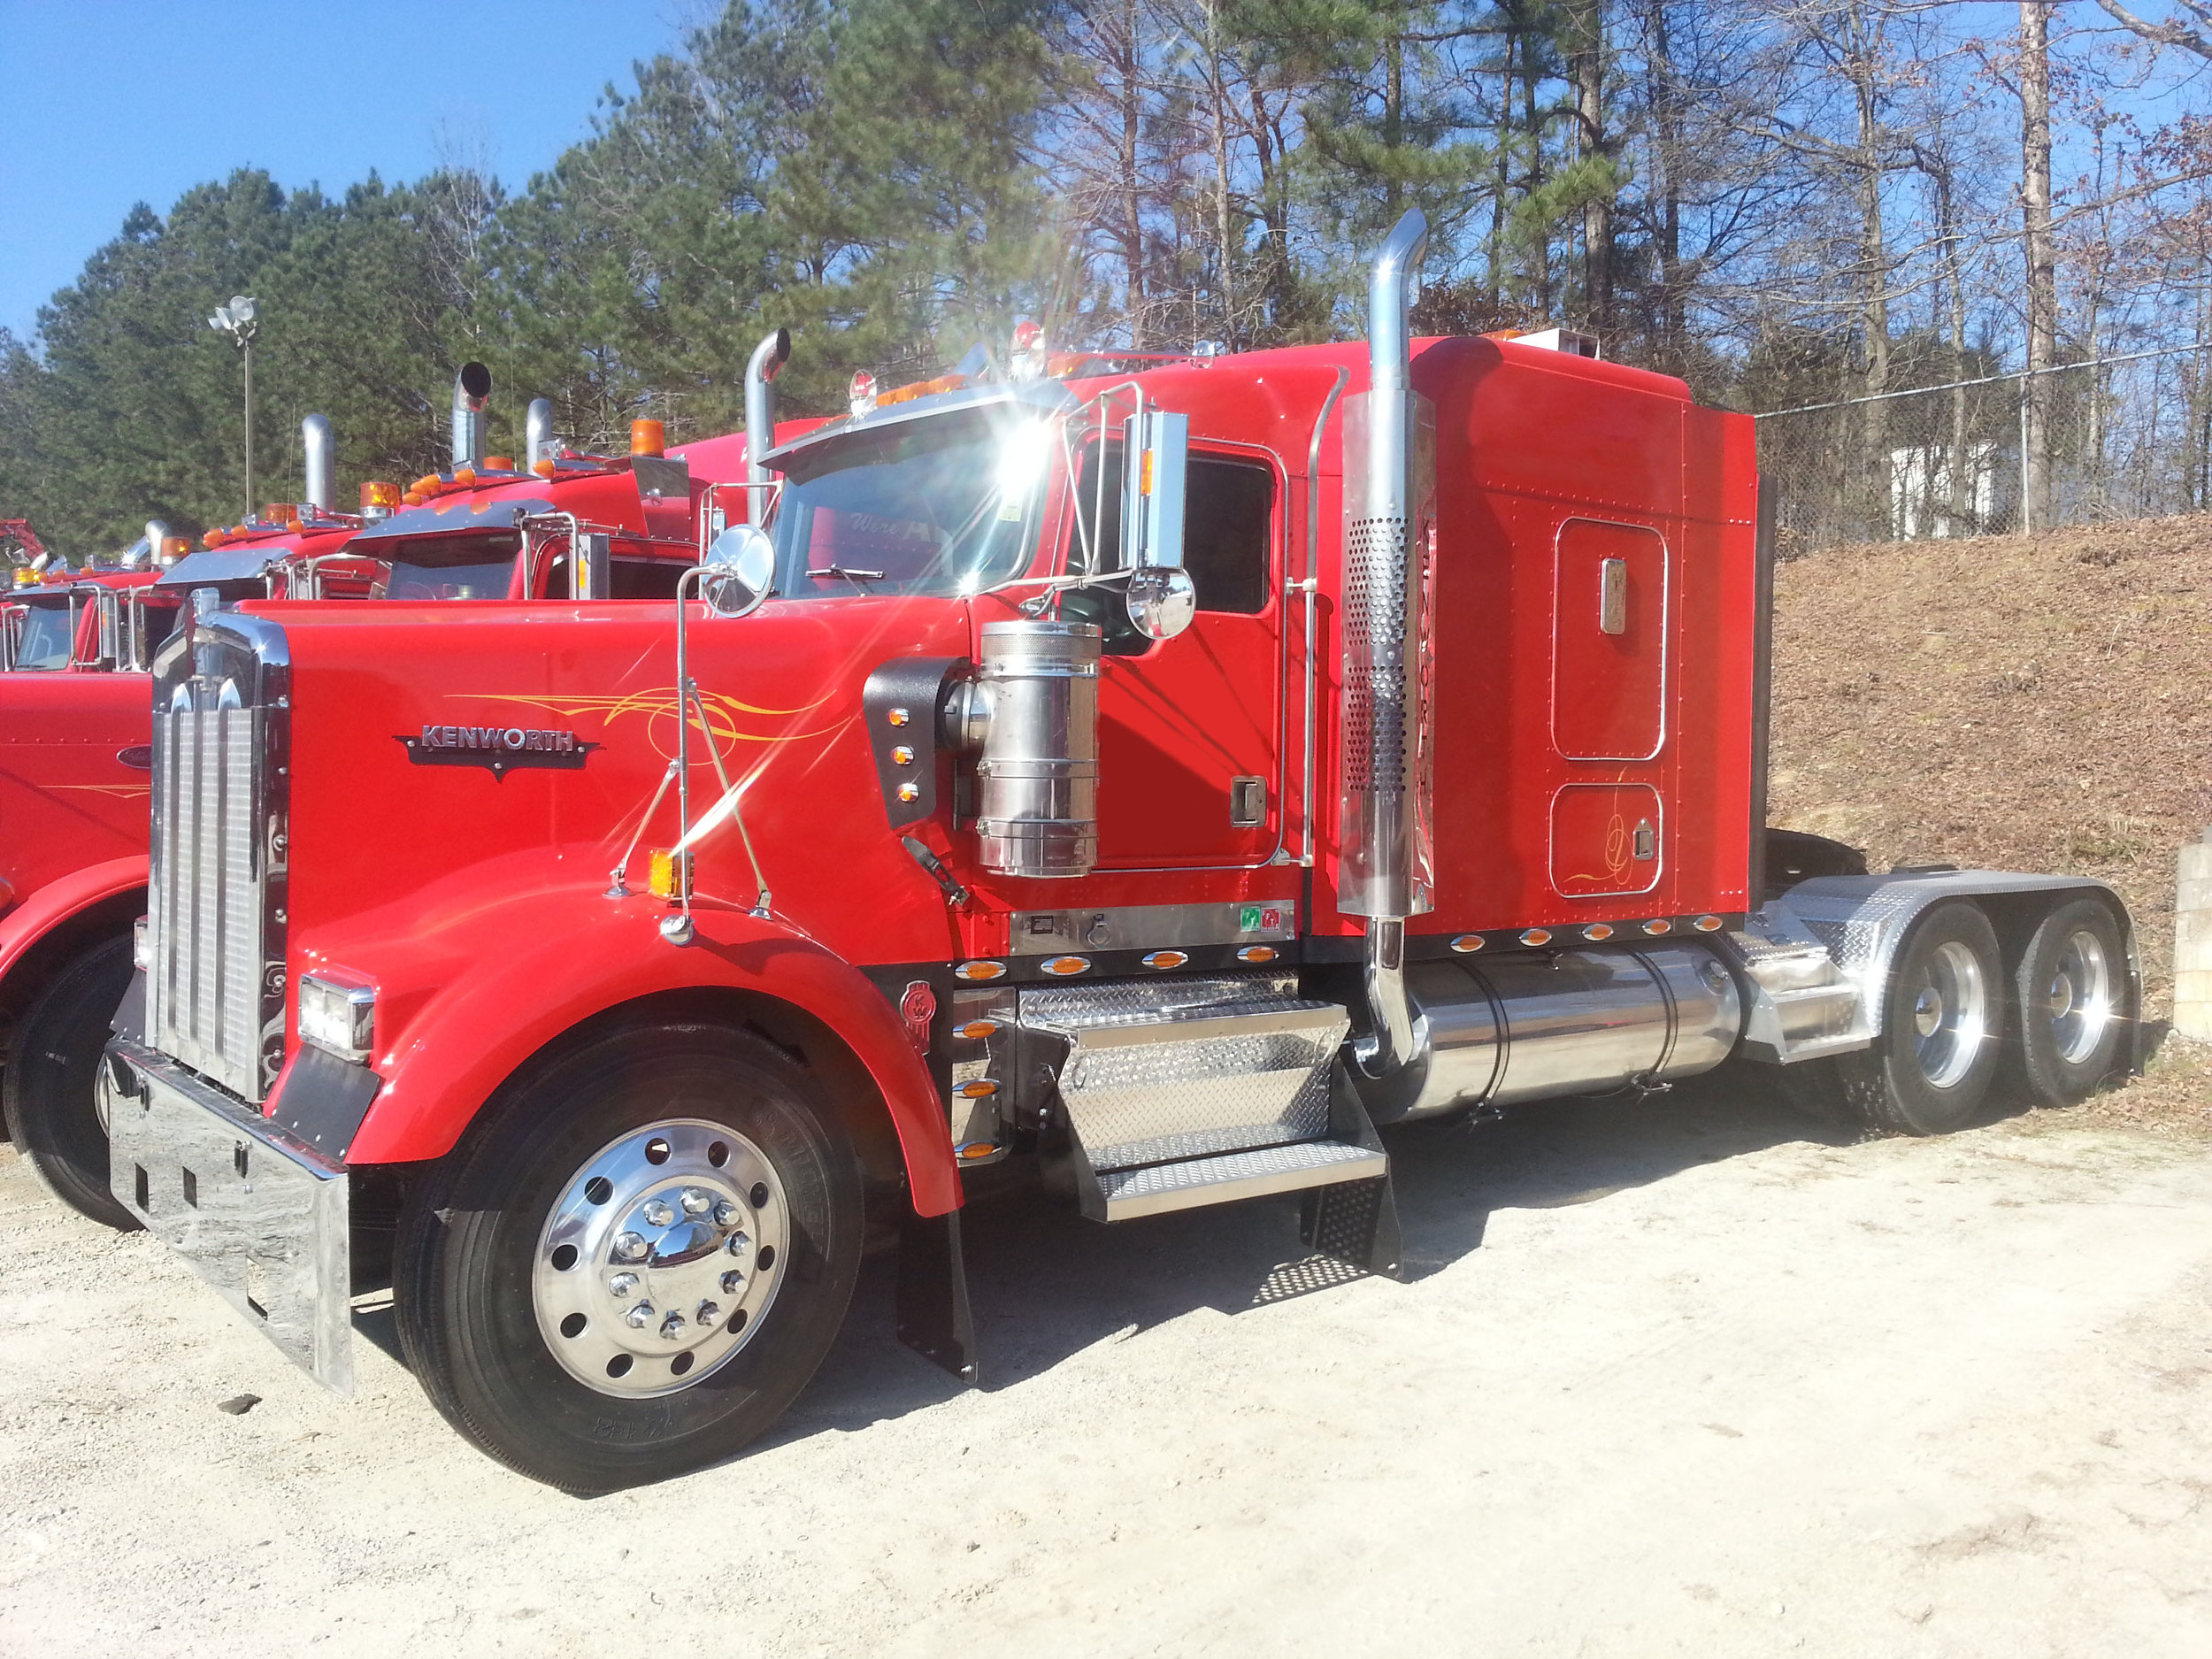 All Crane Red Semi Truck.jpg